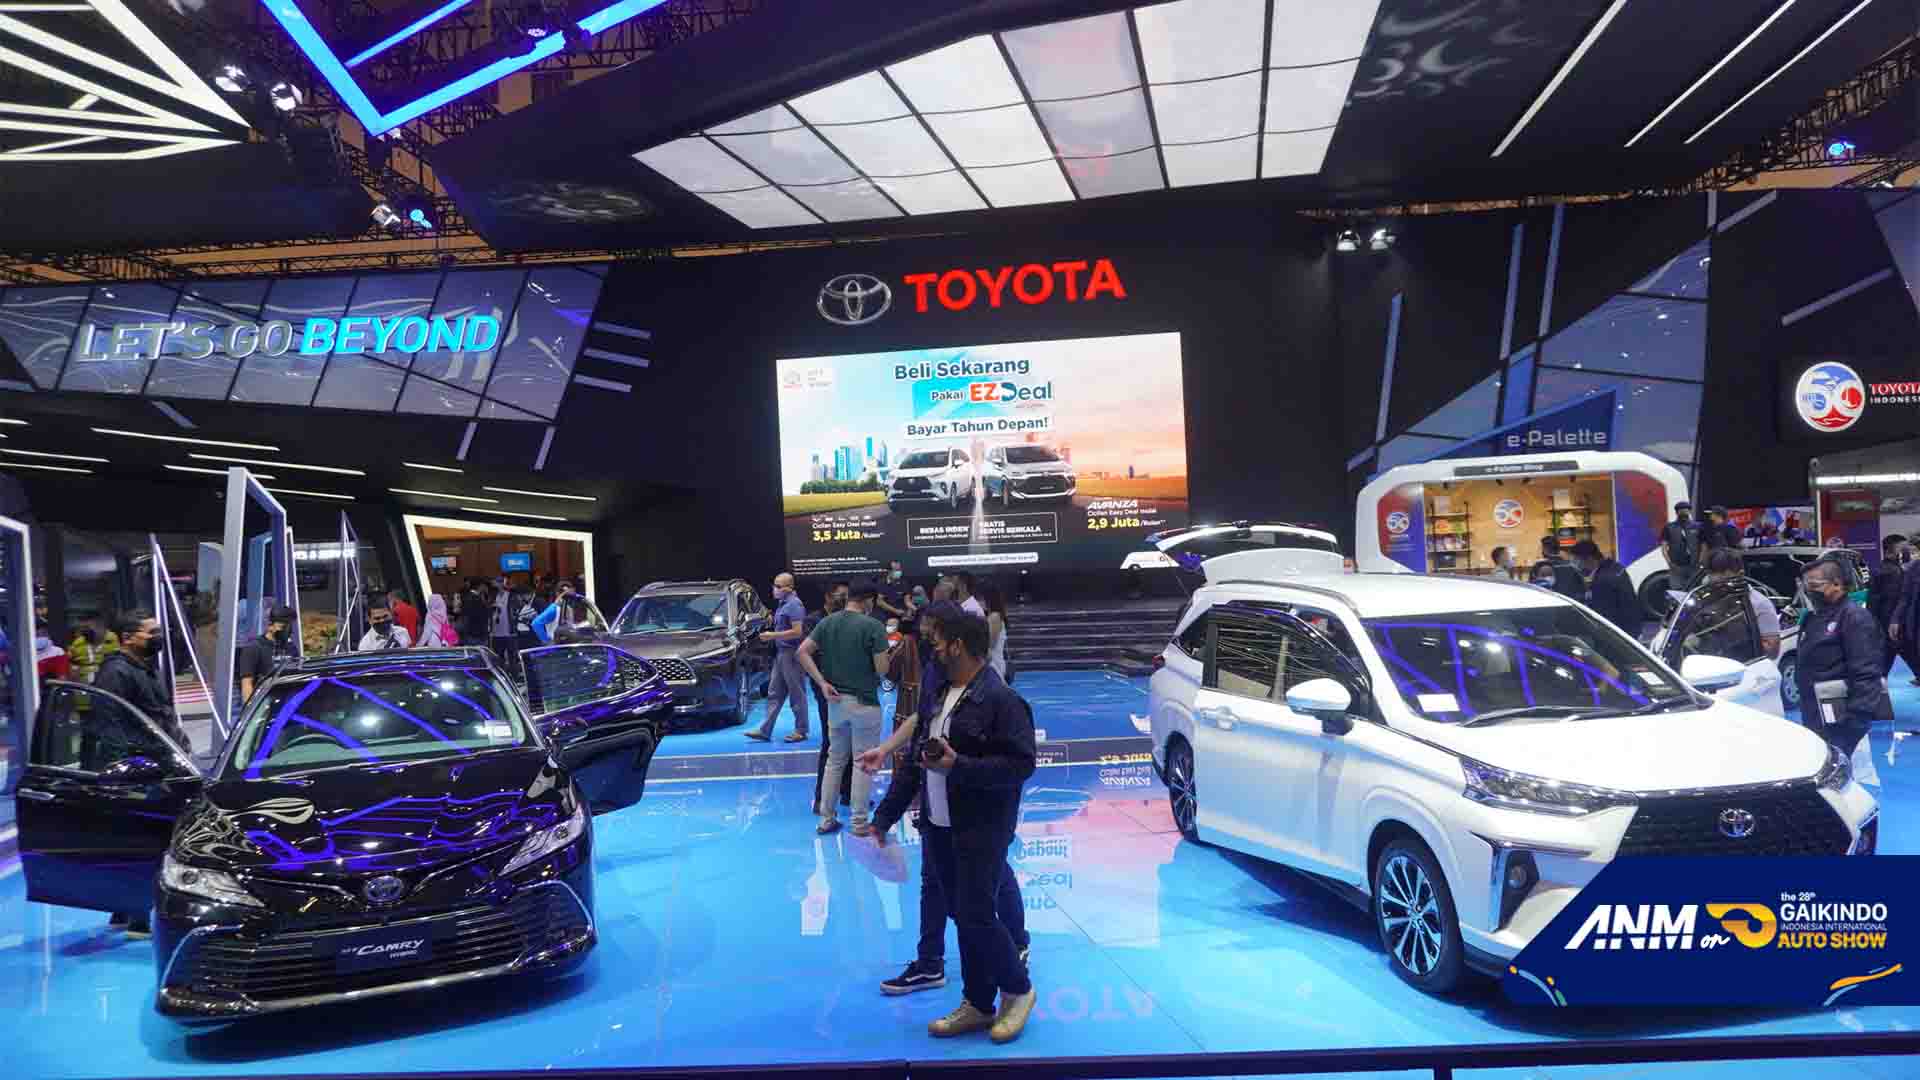 Berita, Booth Toyota GIIAS 2021: GIIAS 2021 : Toyota Catatkan 4.502 SPK, Veloz & Avanza Dominan!